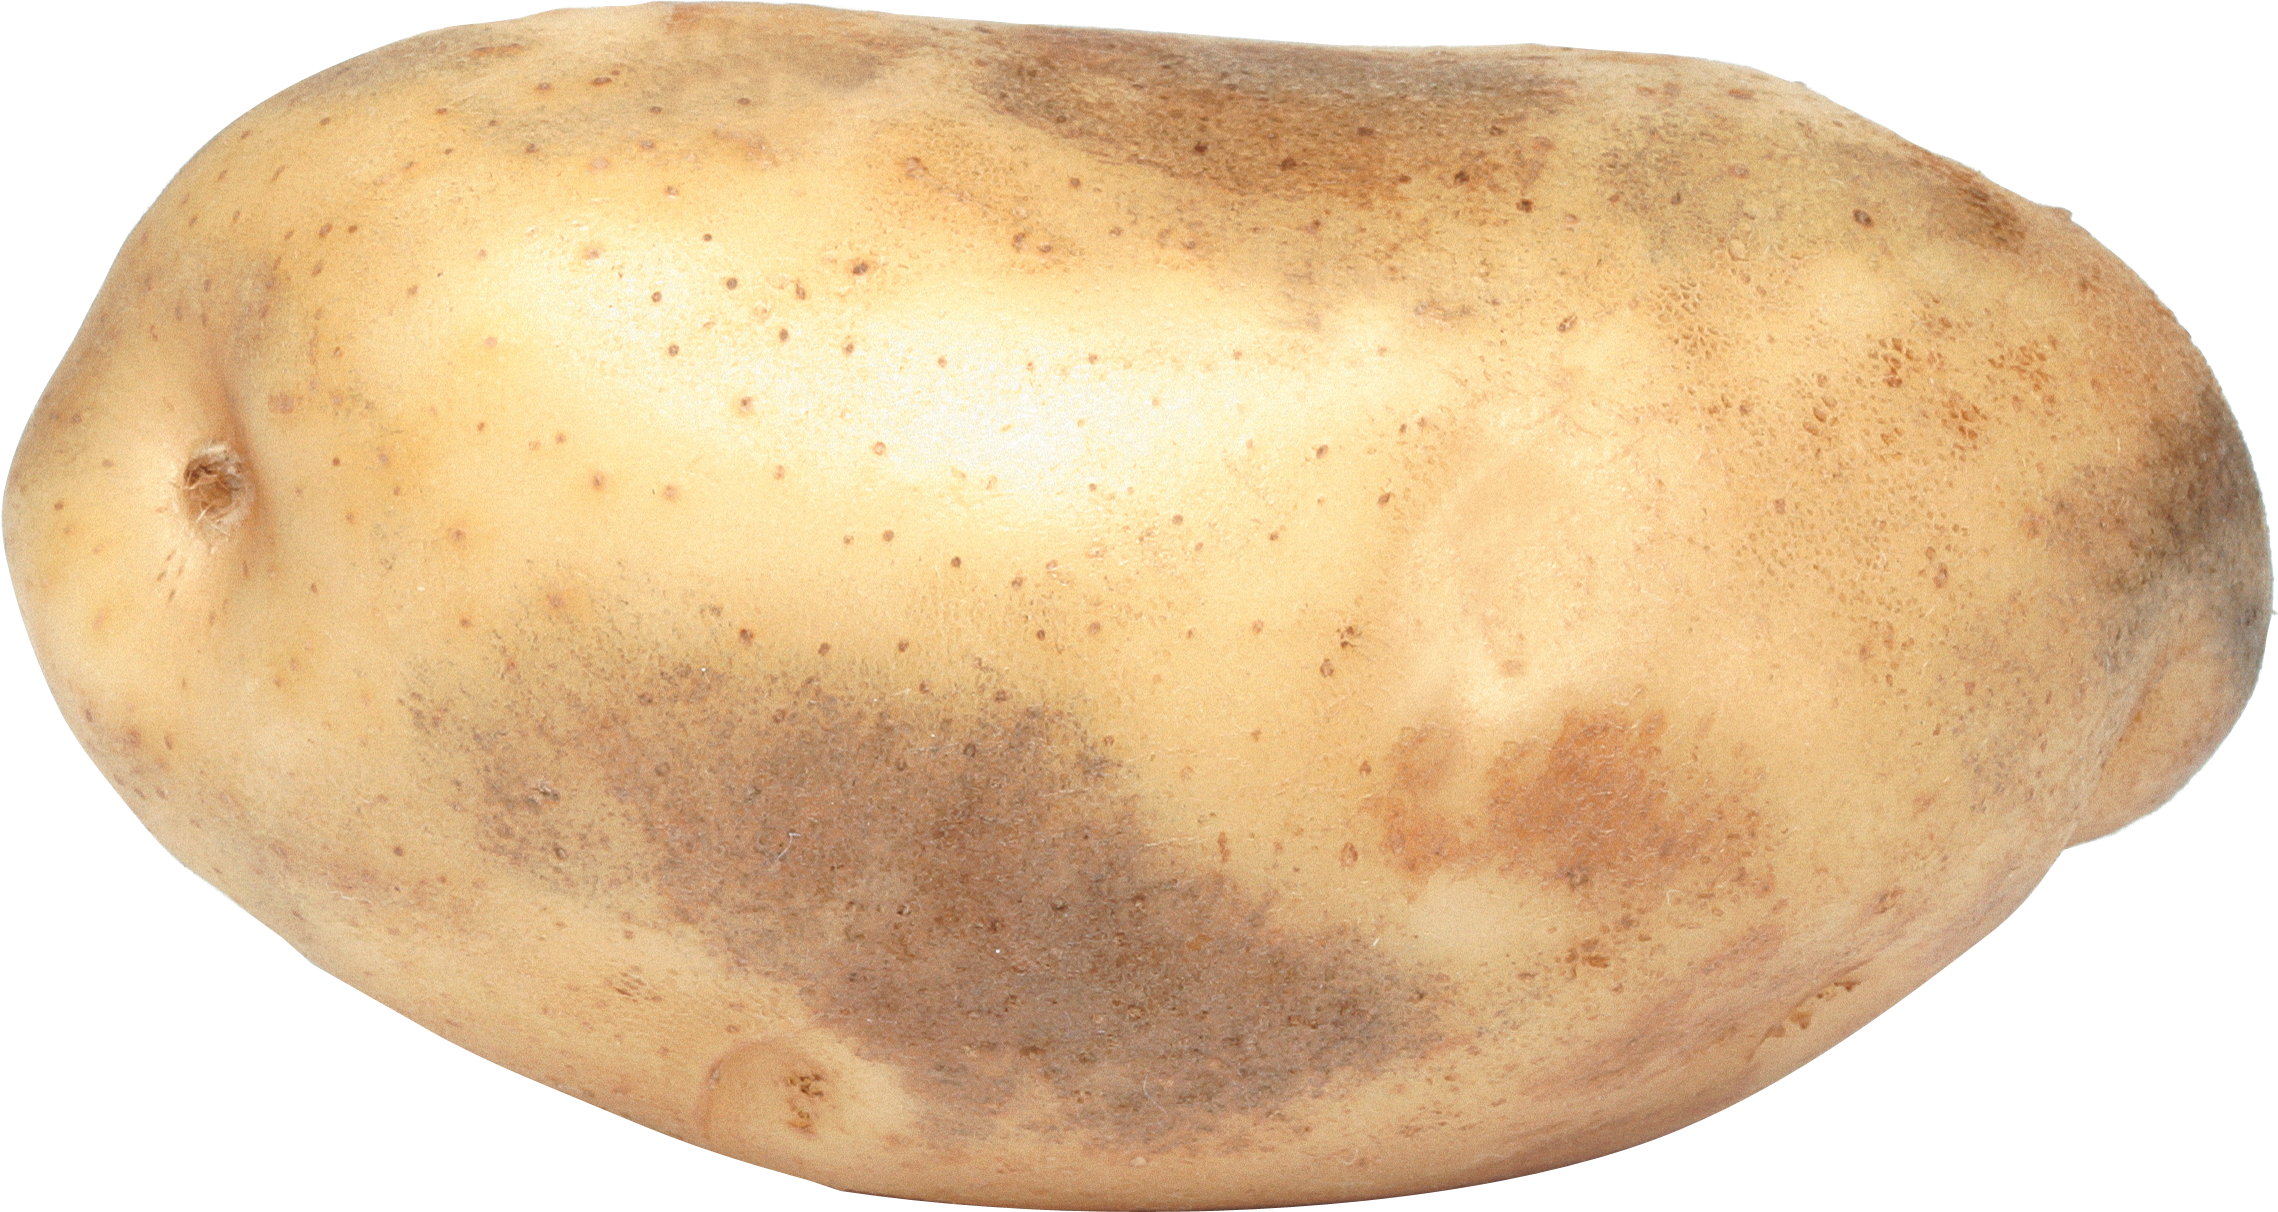 Potato PNG image